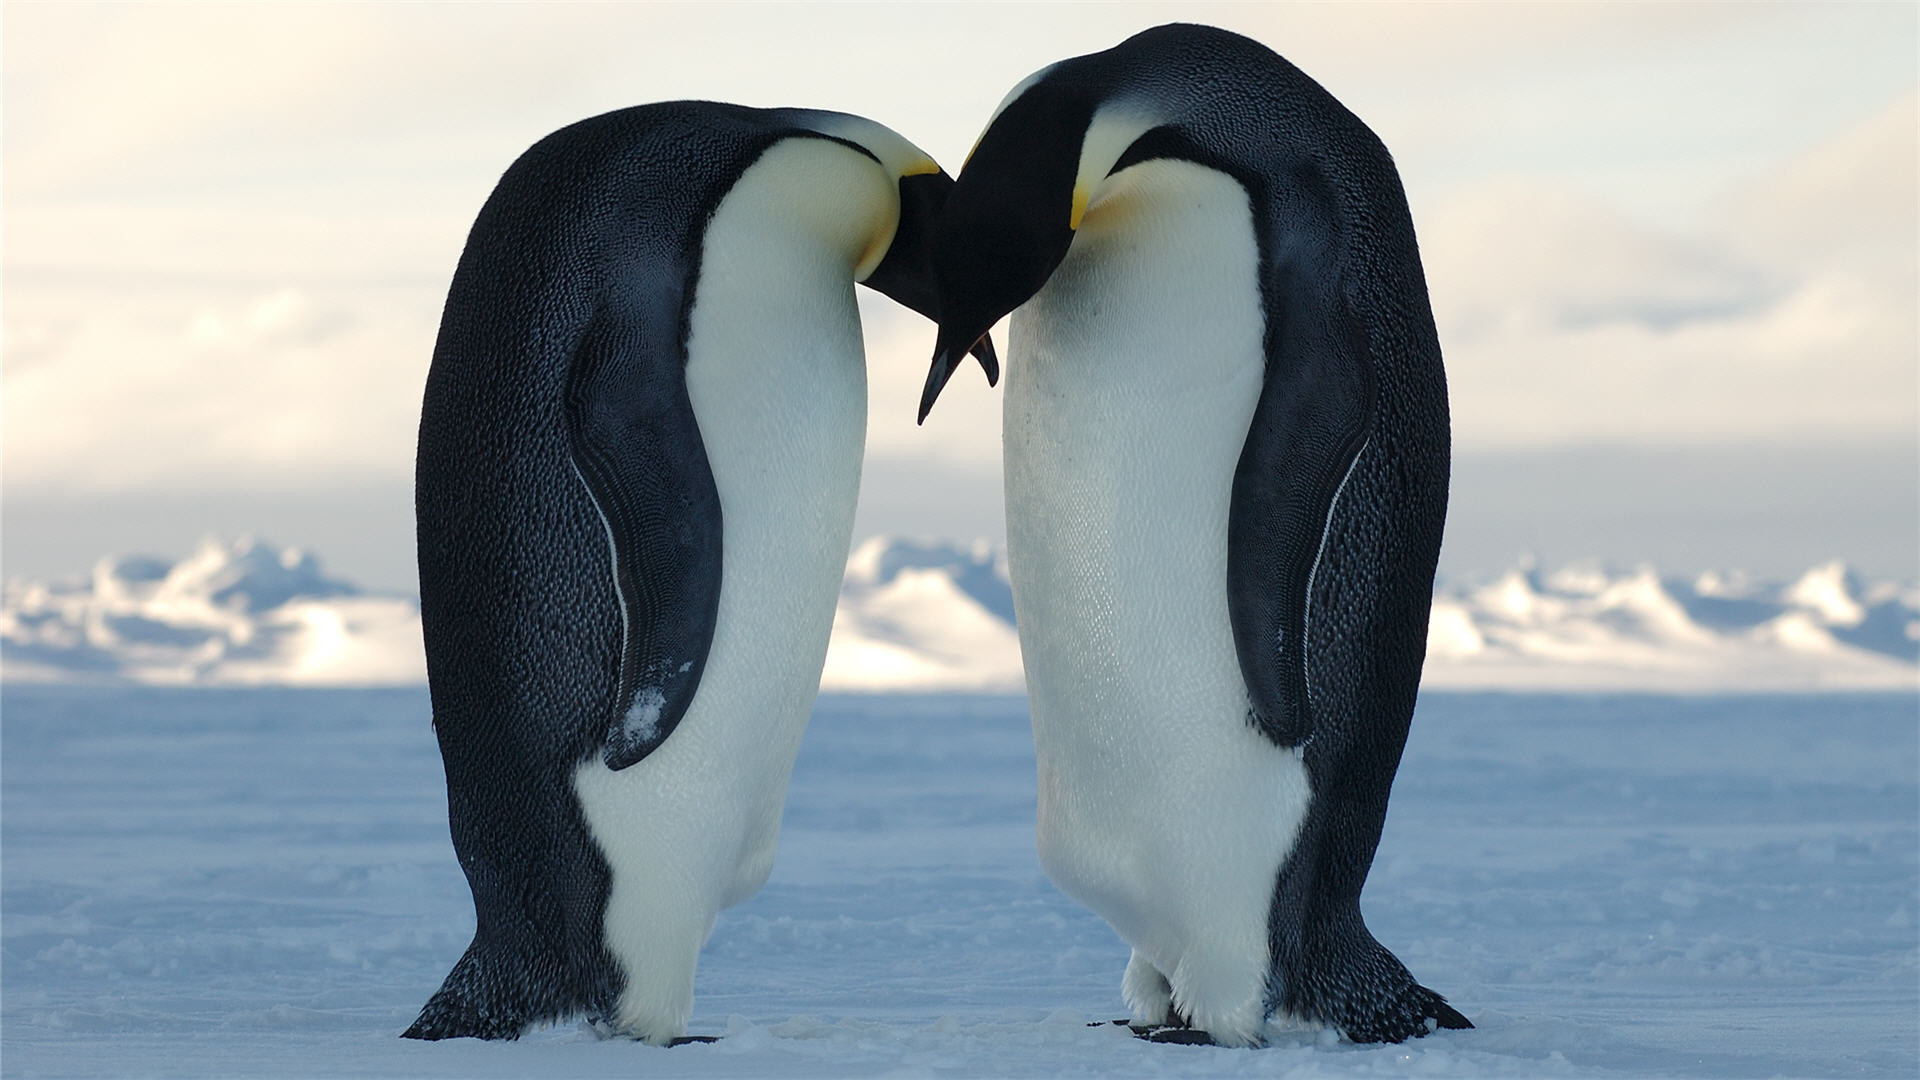 HD penguin wallpaper, Arctic cuteness, Snowy delight, Desktop treat, 1920x1080 Full HD Desktop